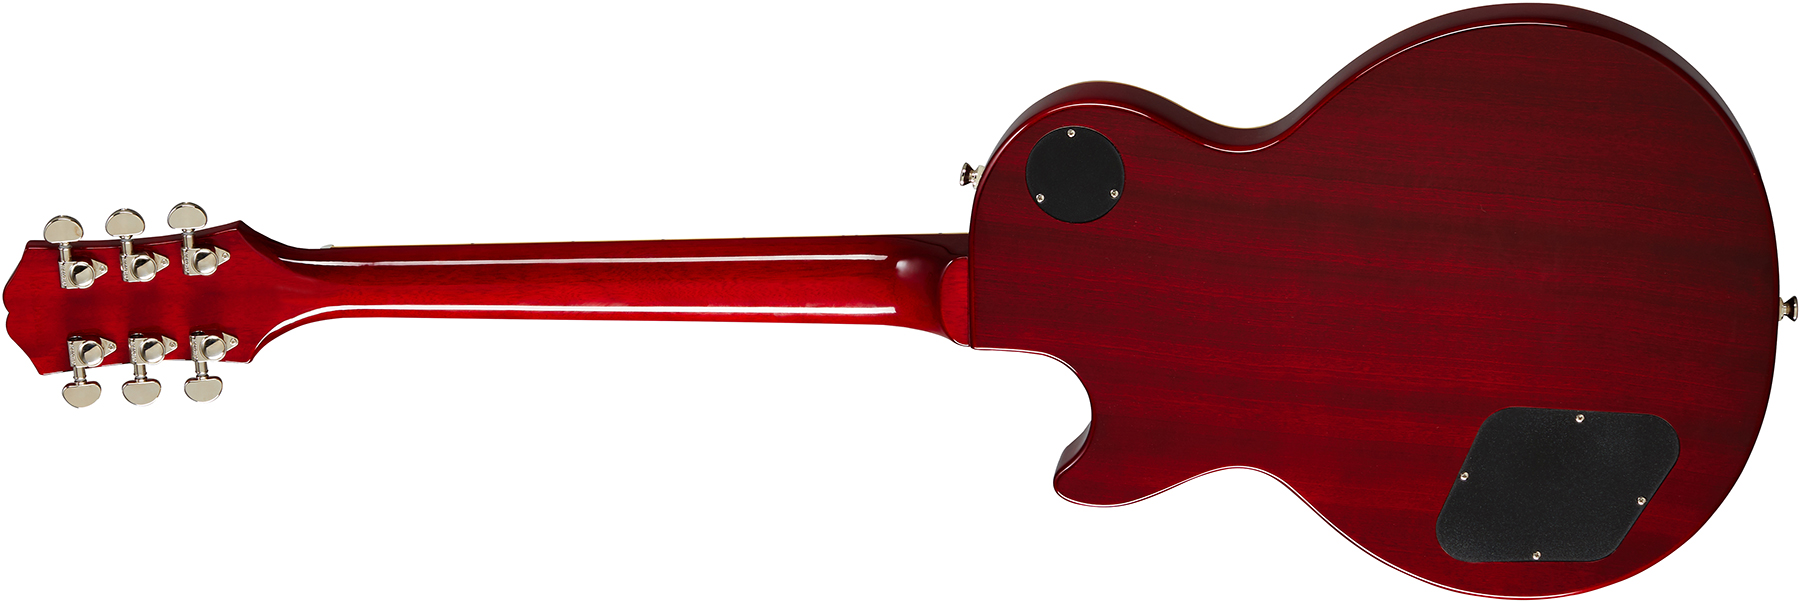 Epiphone Les Paul Standard 60s 2h Ht Rw - Iced Tea - Single cut electric guitar - Variation 1